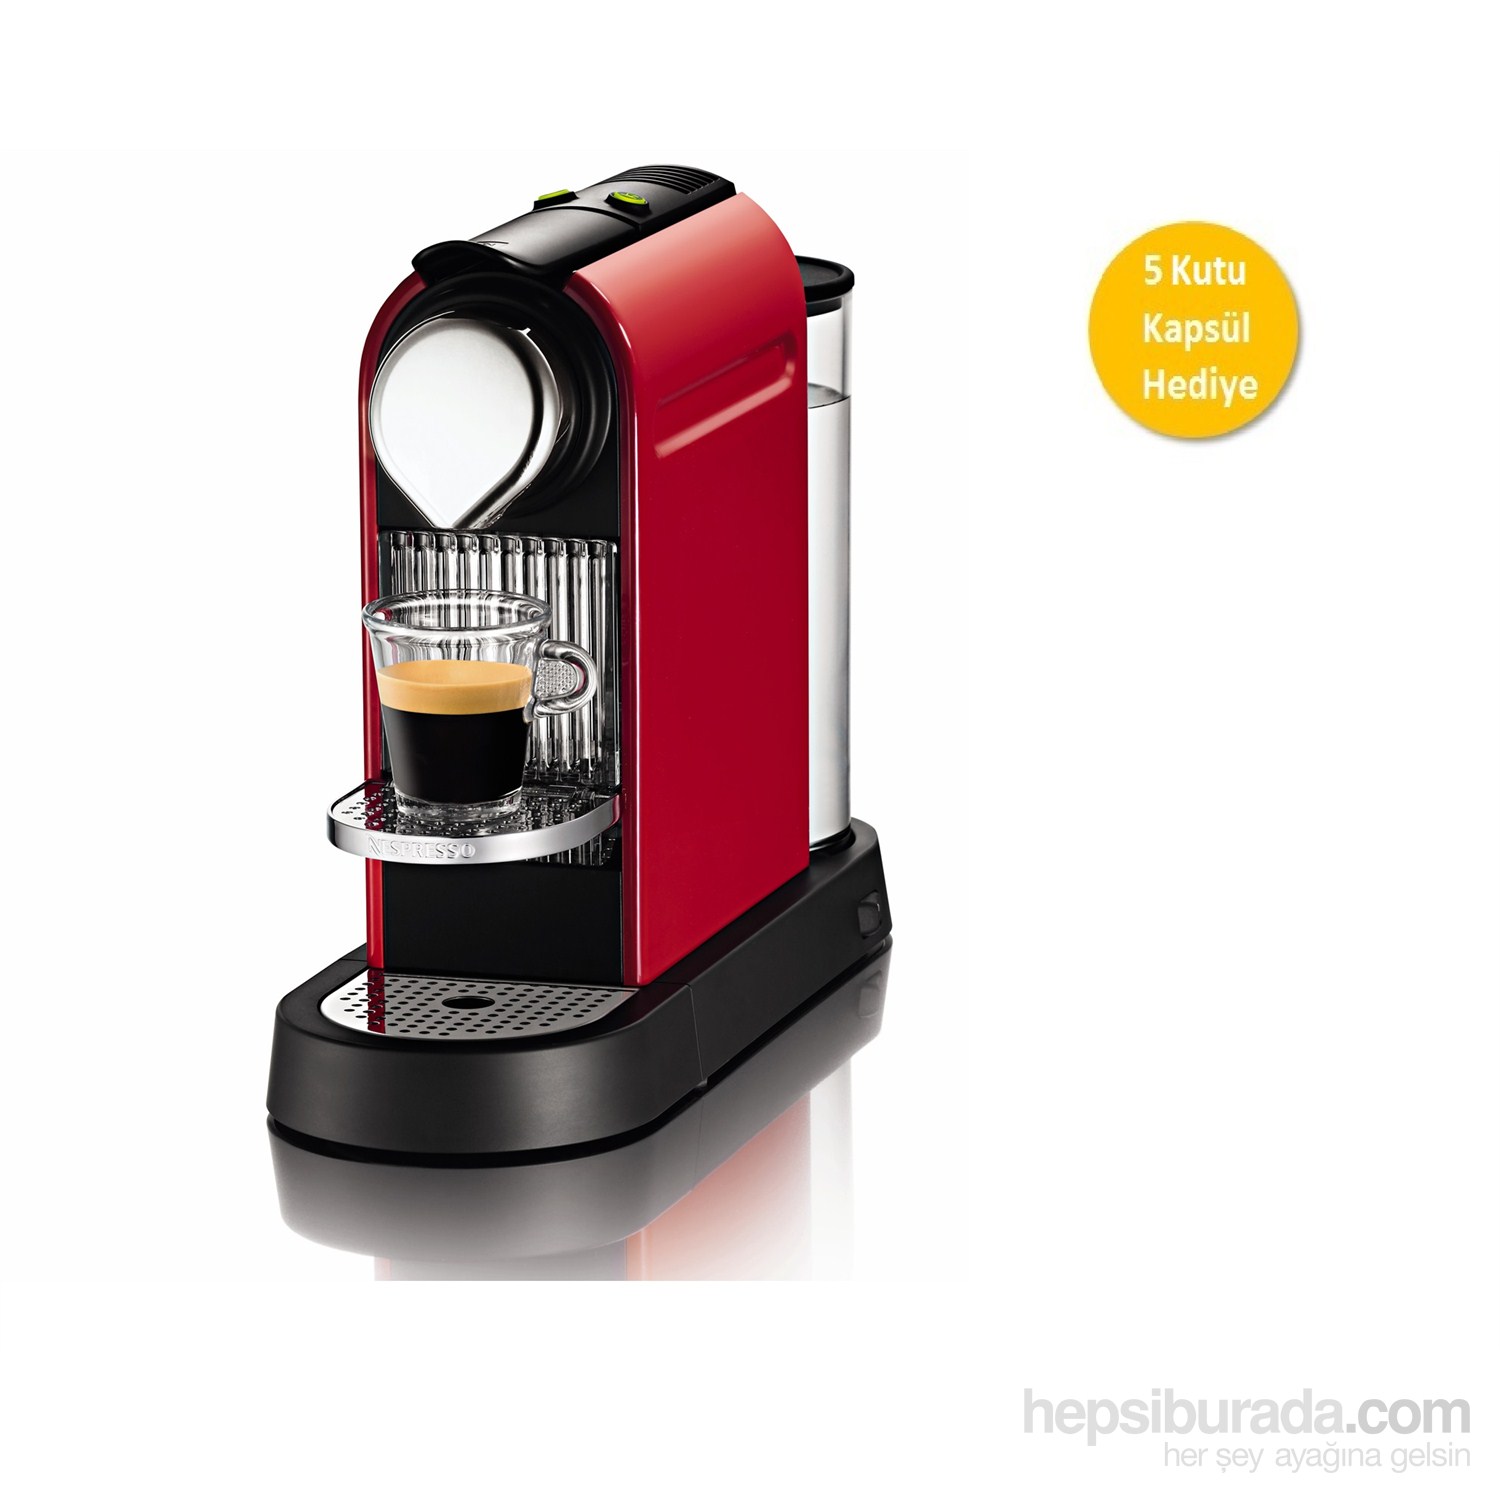 Nespresso C111 Citiz Single Kahve Makinesi-Kırmızı Renkli